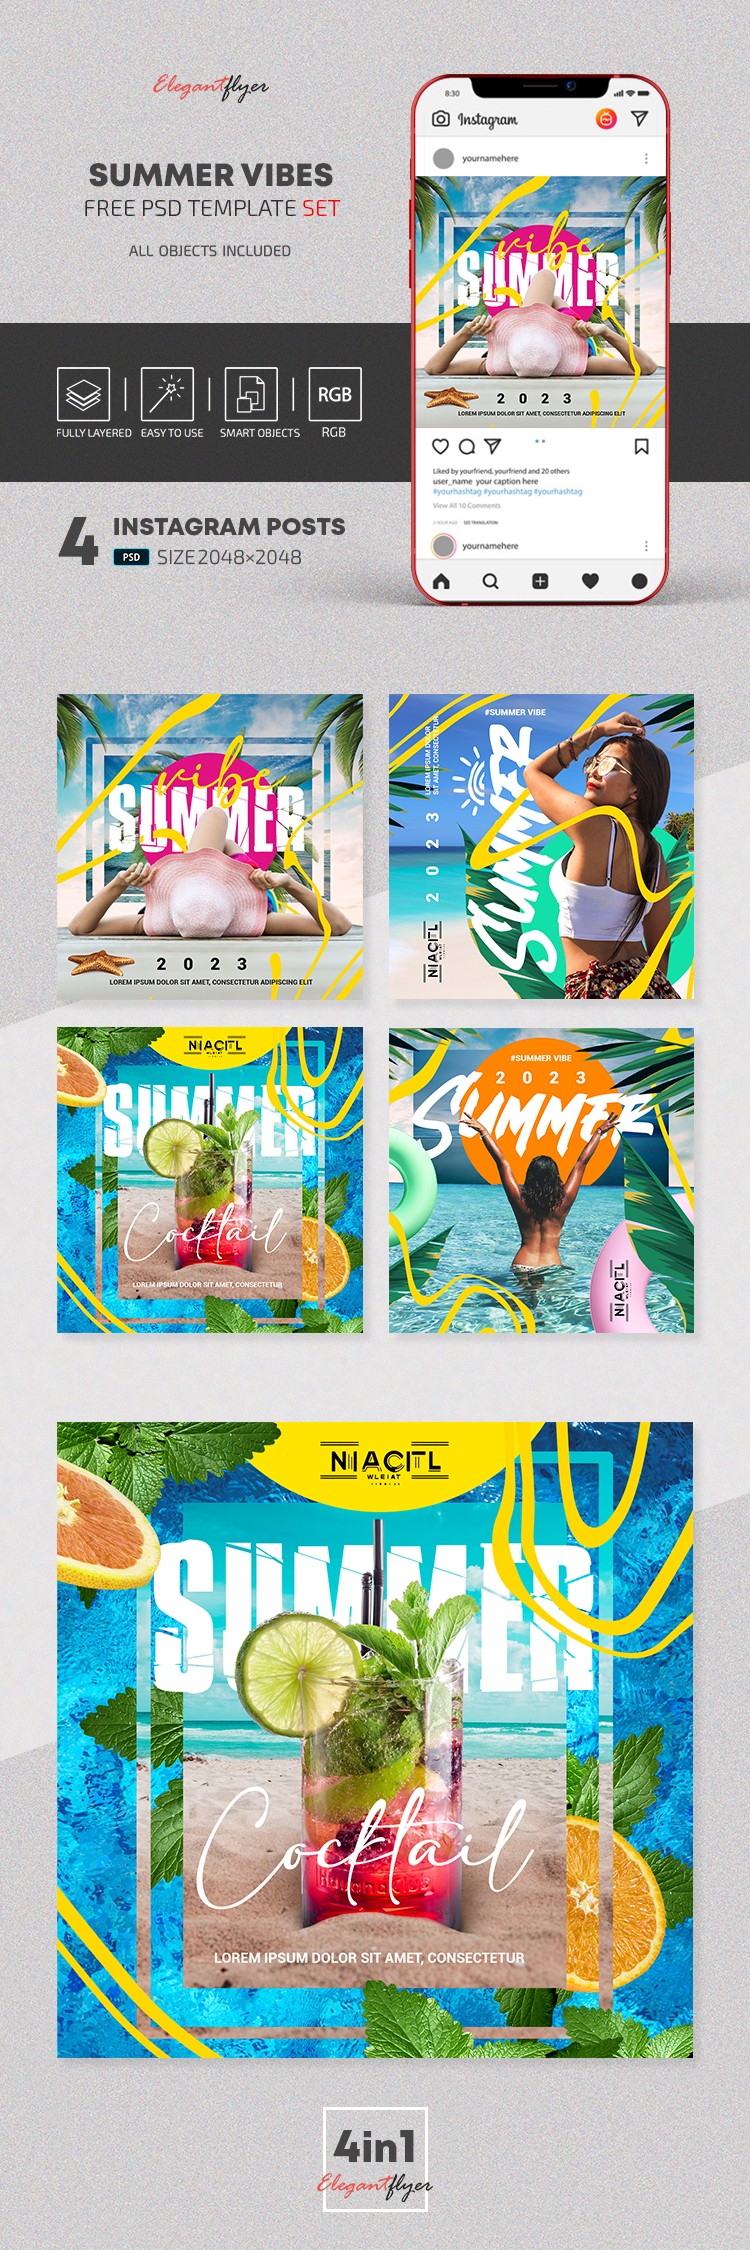 Summer Vibes - Free Instagram Post Templates Set in PSD by ElegantFlyer